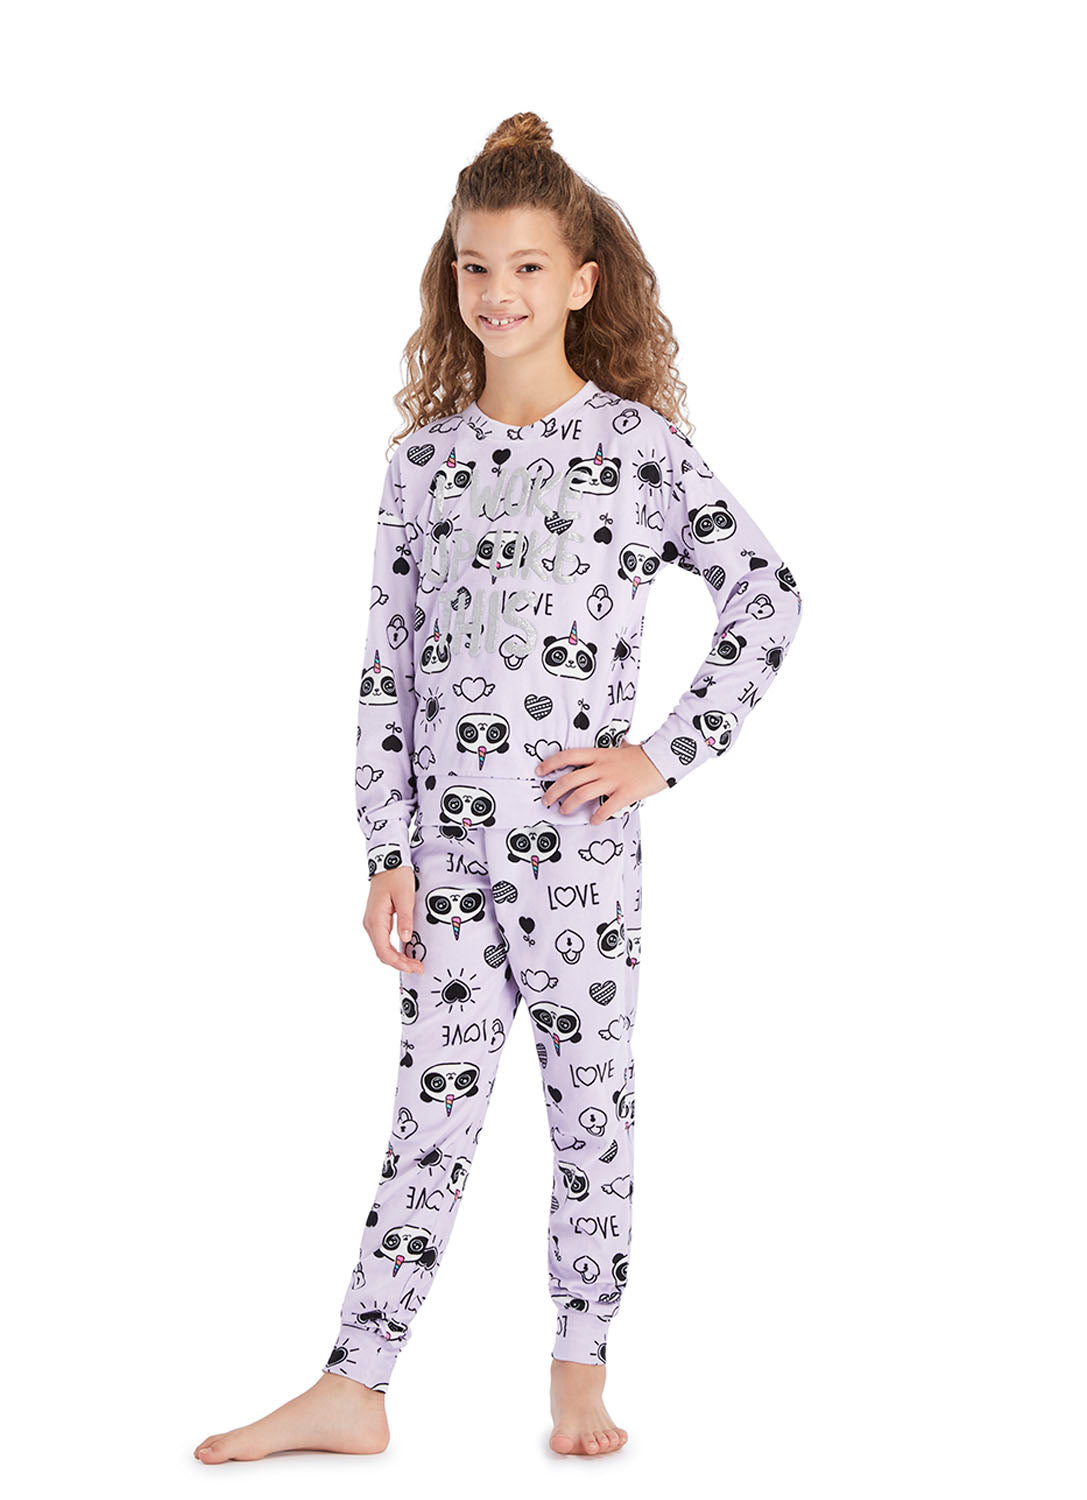 Girl wearing Pajama Set with Panda Print in lavender colour 